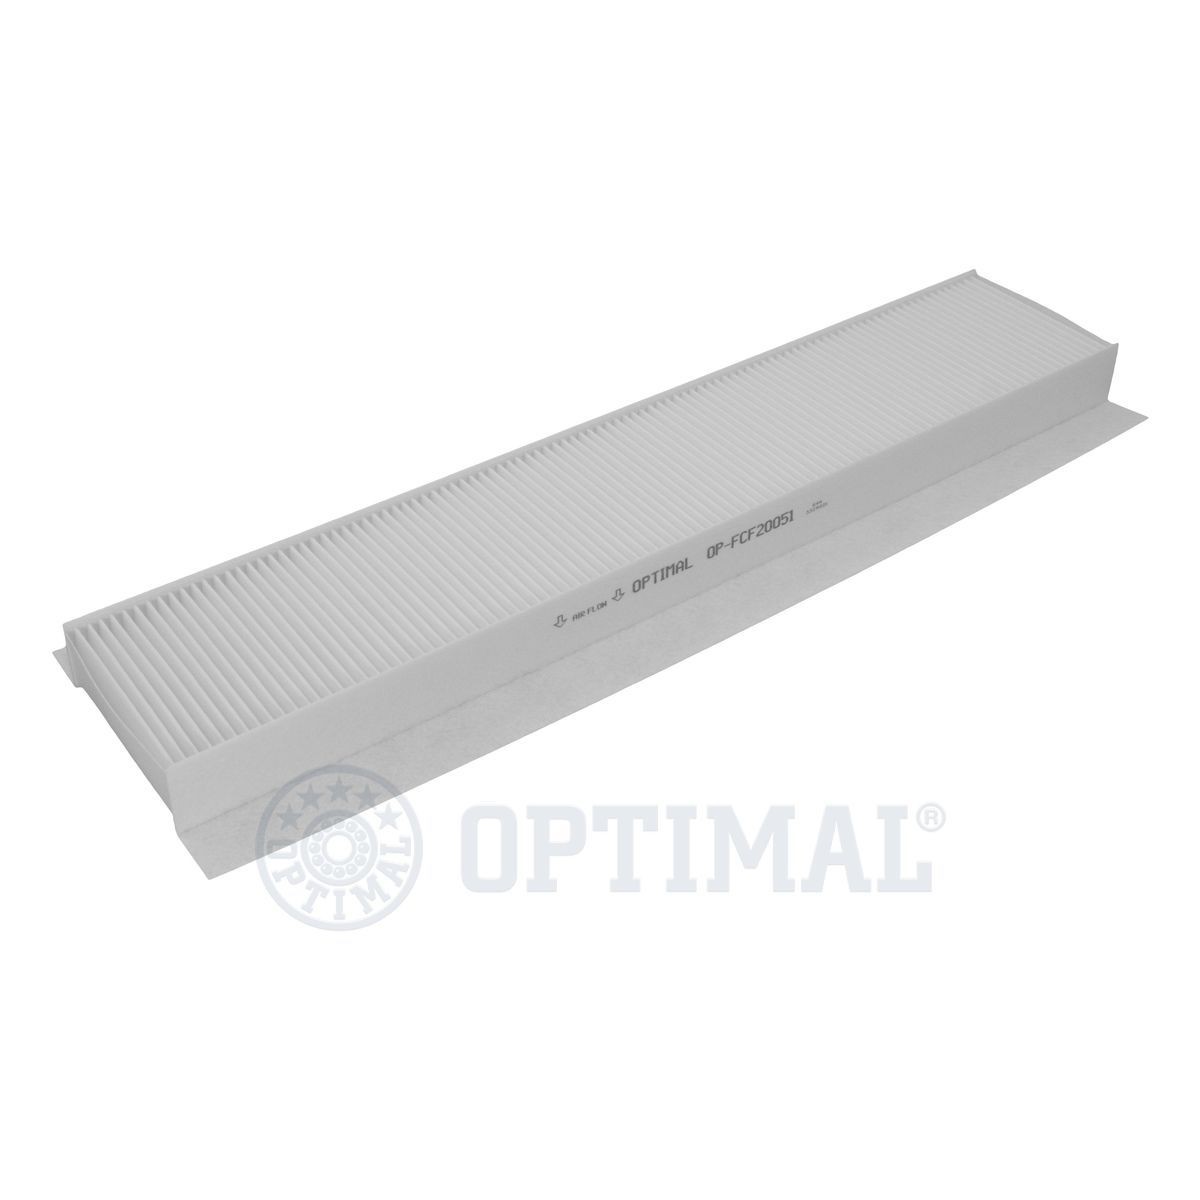 OPTIMAL Particulate Filter, 510 mm x 97 mm x 34 mm Width: 97mm, Height: 34mm, Length: 510mm Cabin filter OP-FCF20051 buy